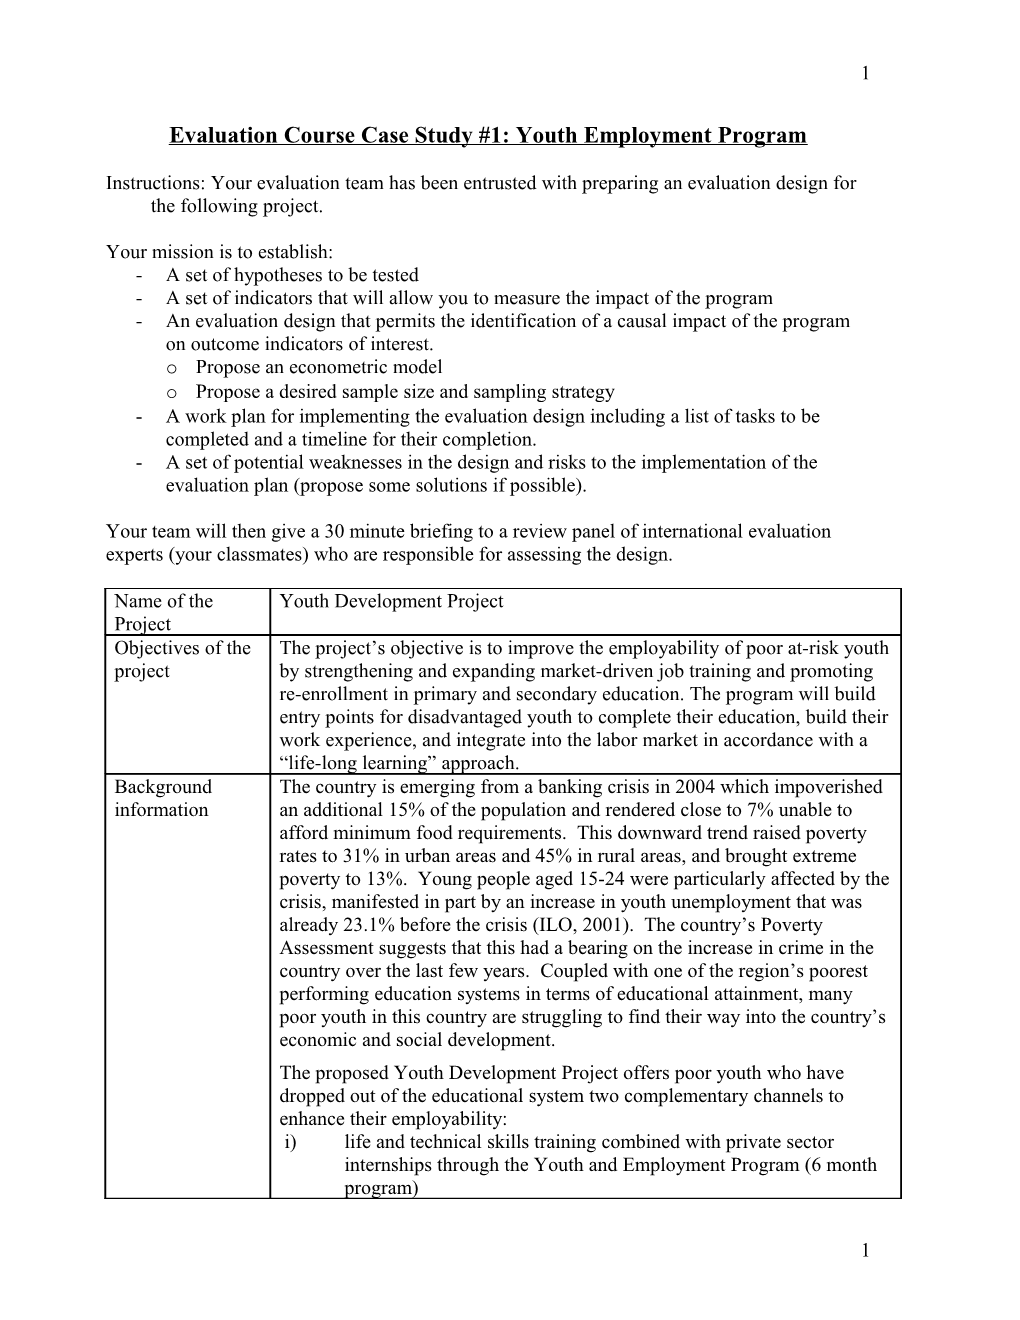 Evaluation Clinic Preparation Sheet